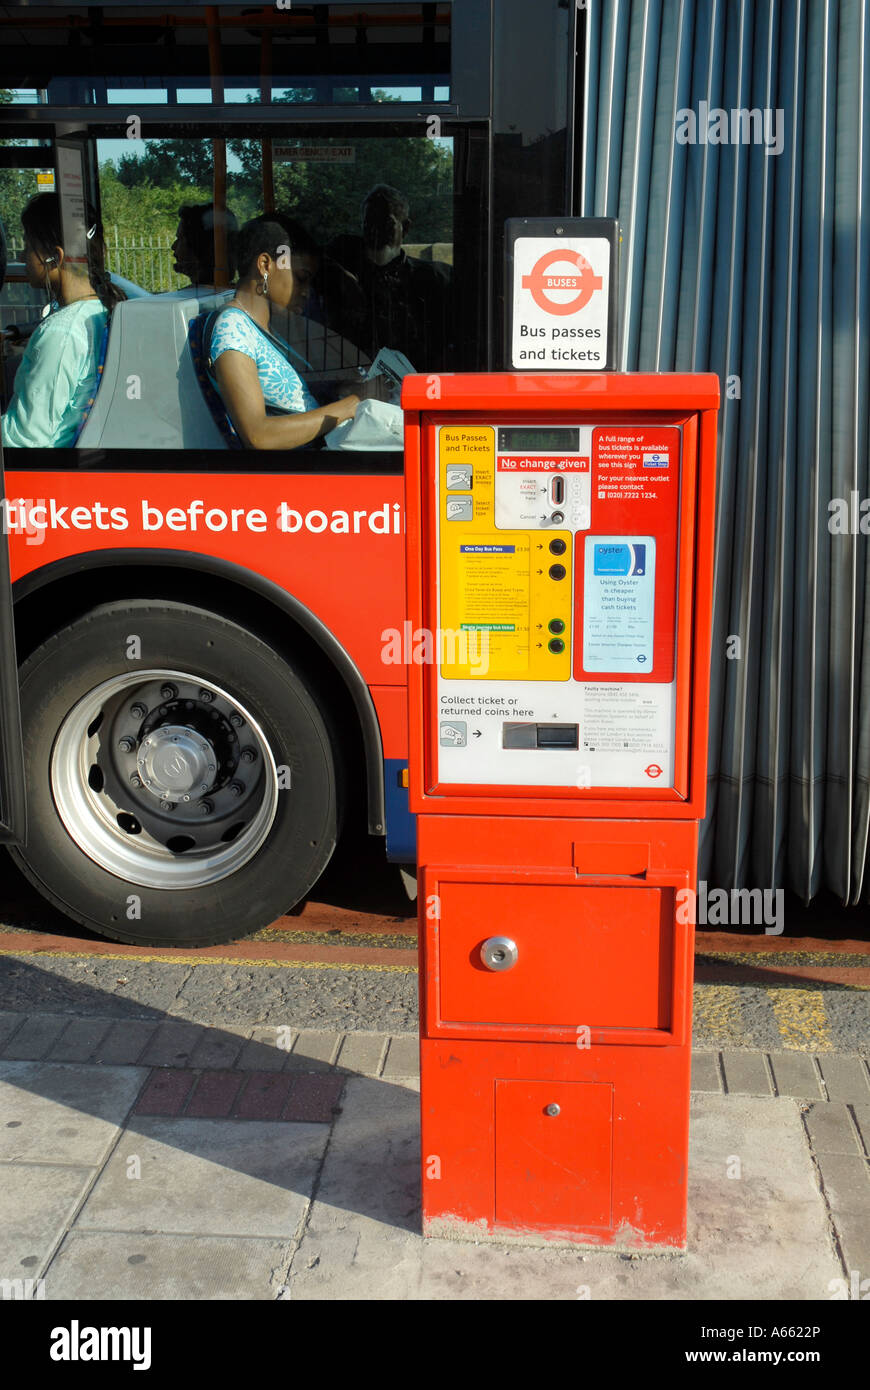 Bus ticket machine and a Bendibus at Stratford London Stock Photo - Alamy